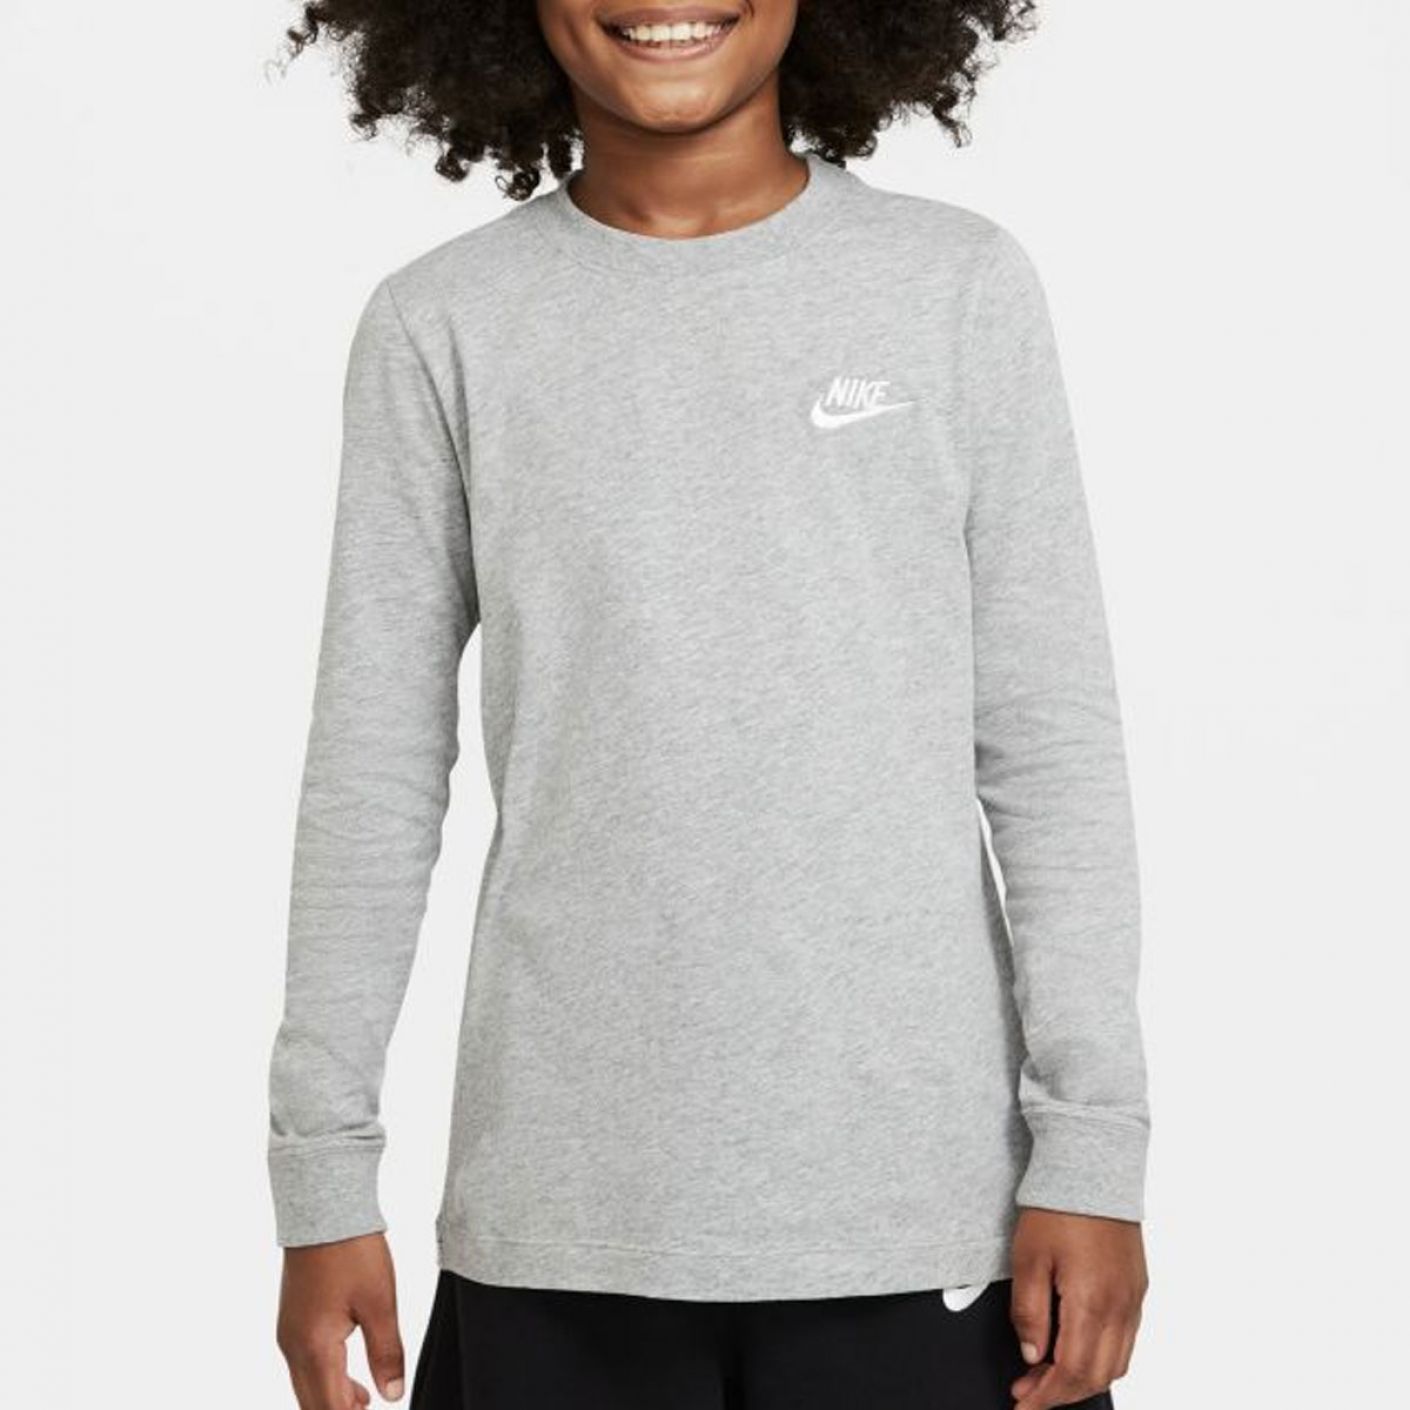 Nike T-shirt Manica Lunga Sportswear Grigia